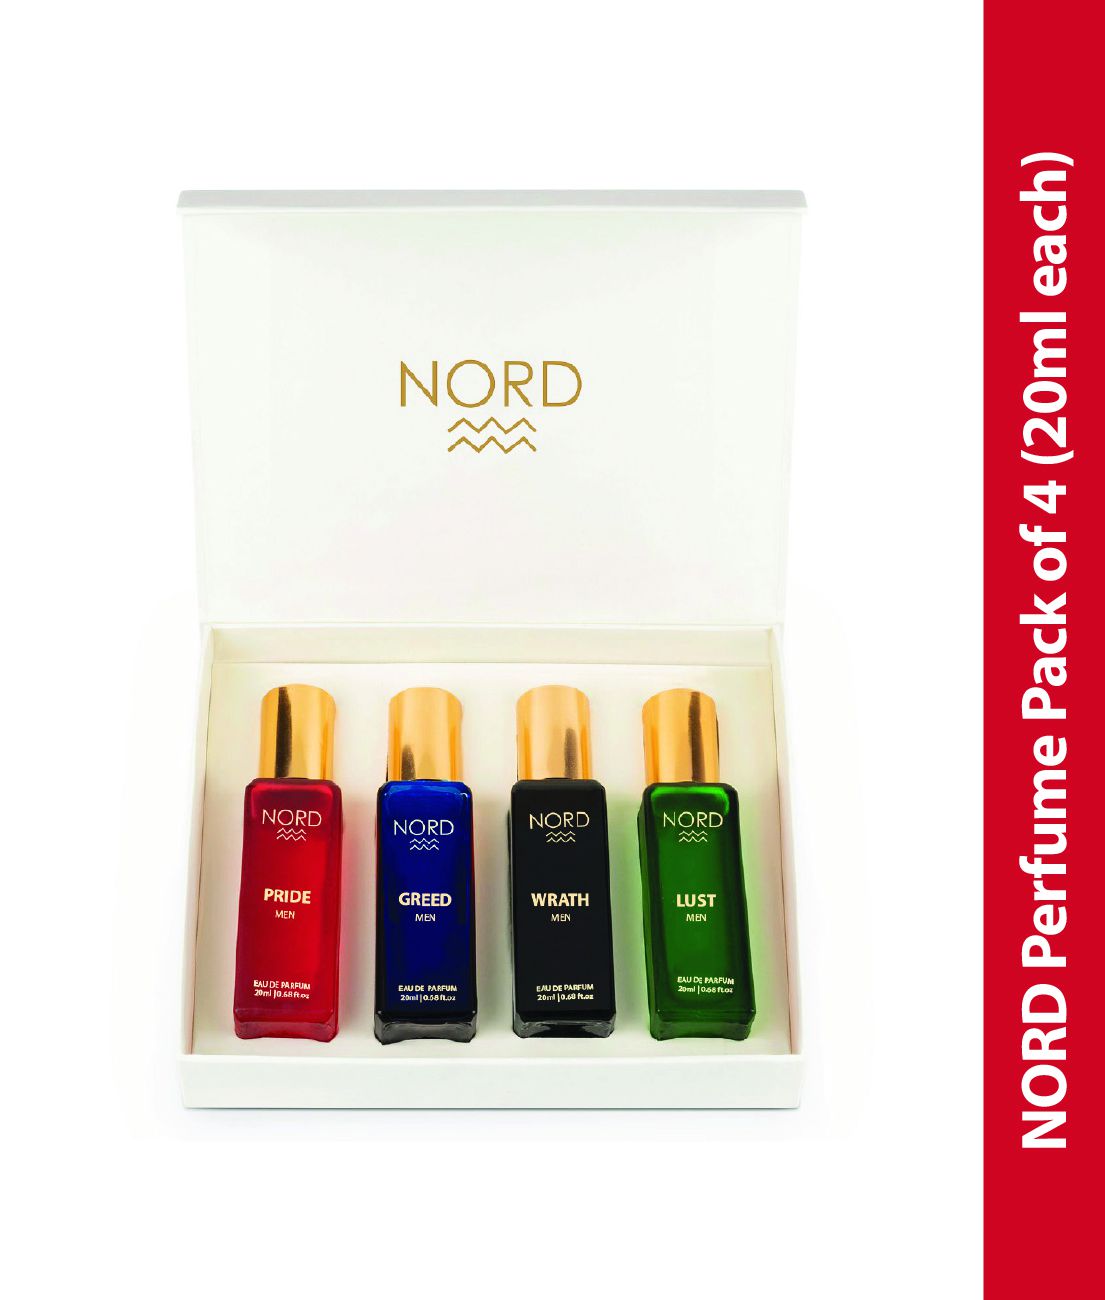     			NORD Luxury Perfume Gift Set (Pride, Lust, Wrath, Greed) for Men, Pack of 4 (20 ml each)